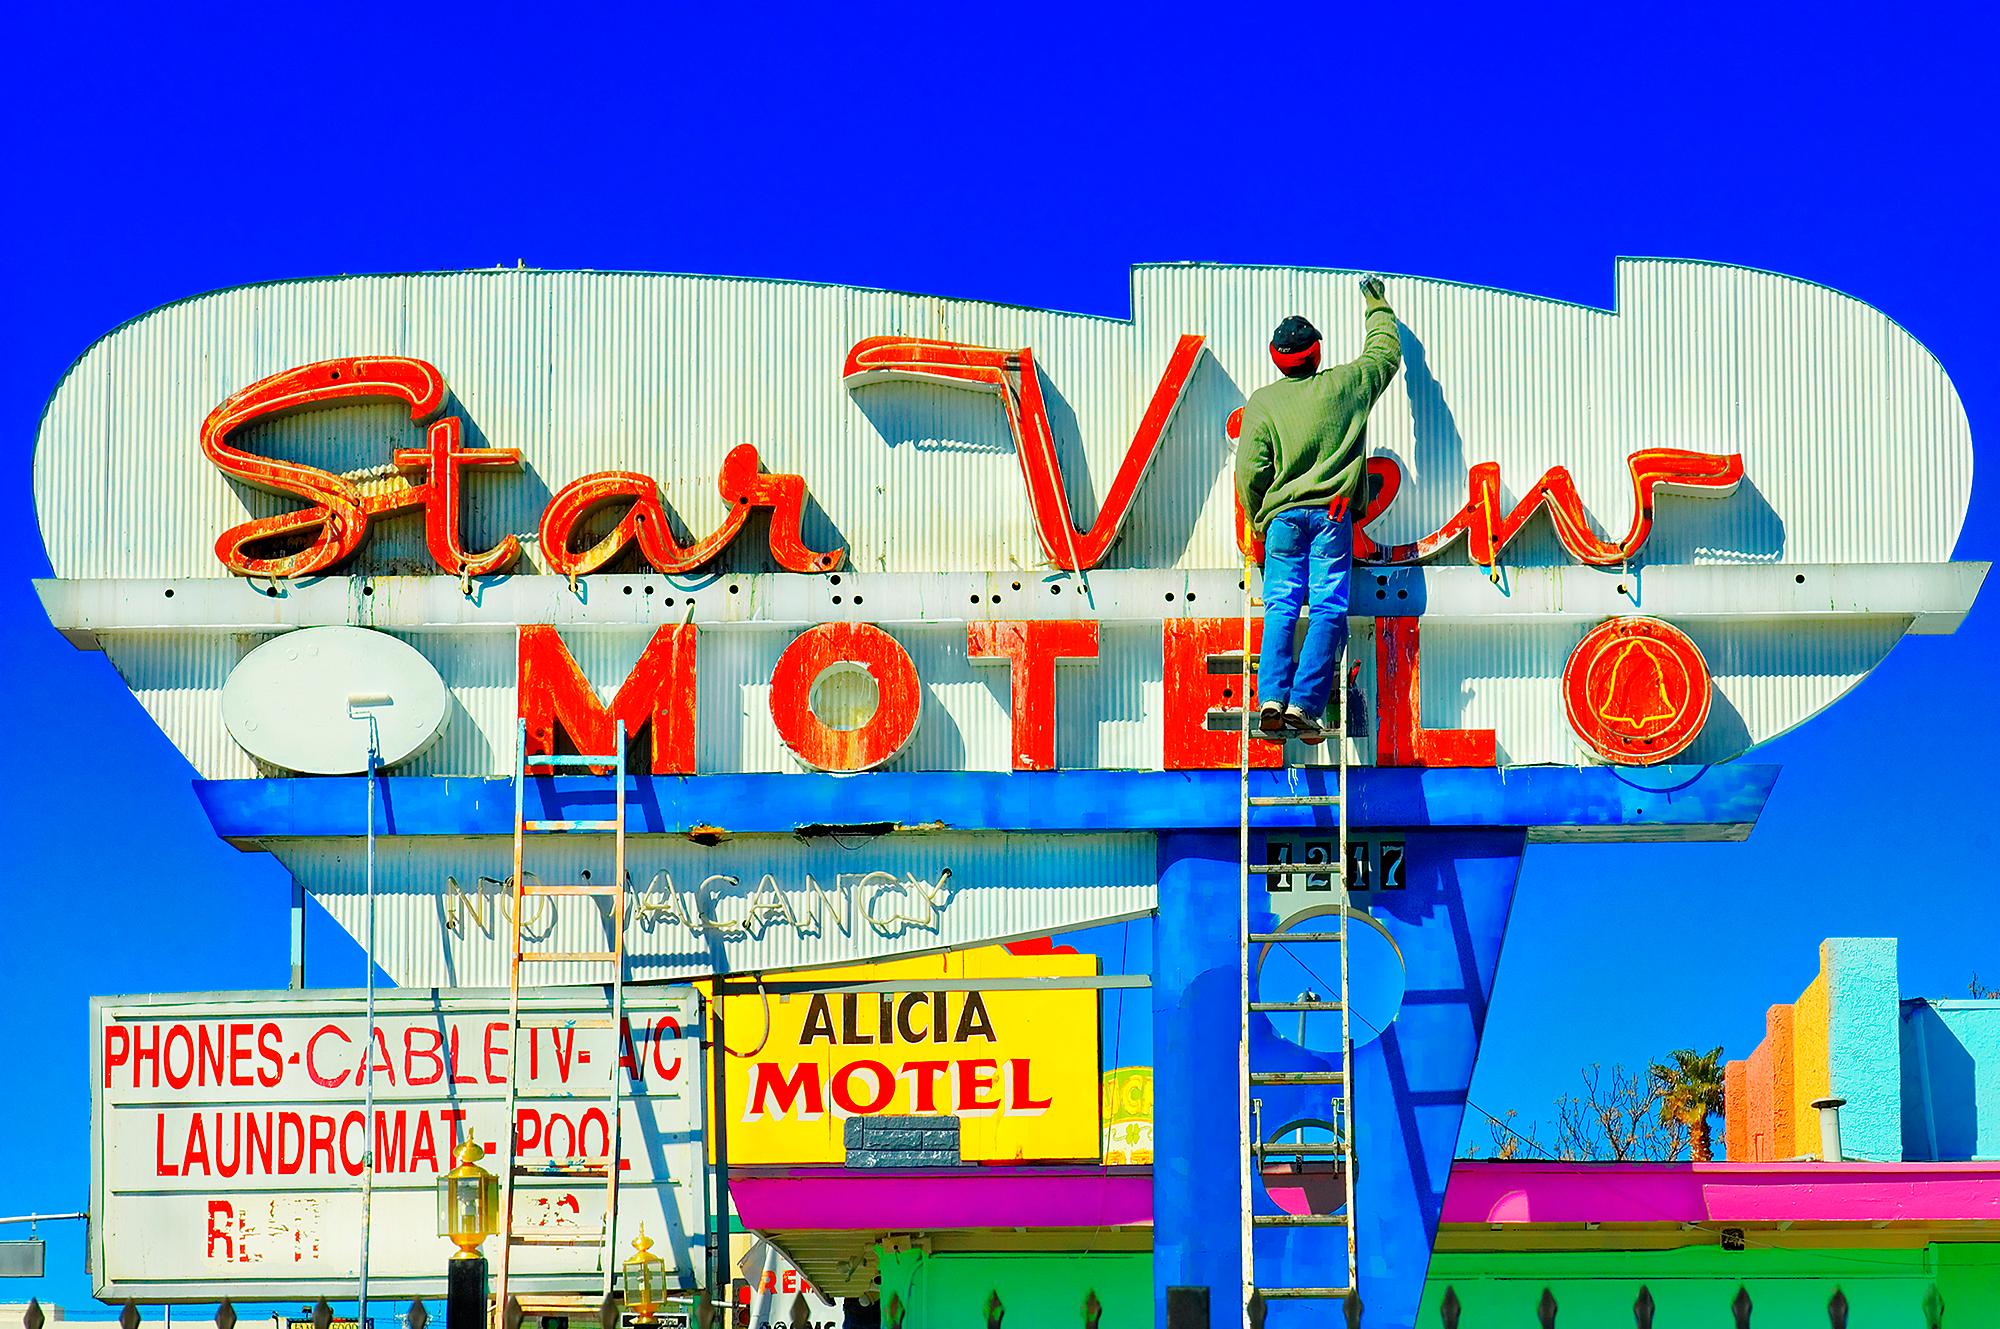 Abstract Photograph Mitchell Funk - Motel Fremont Street, Las Vegas, milieu du siècle dernier